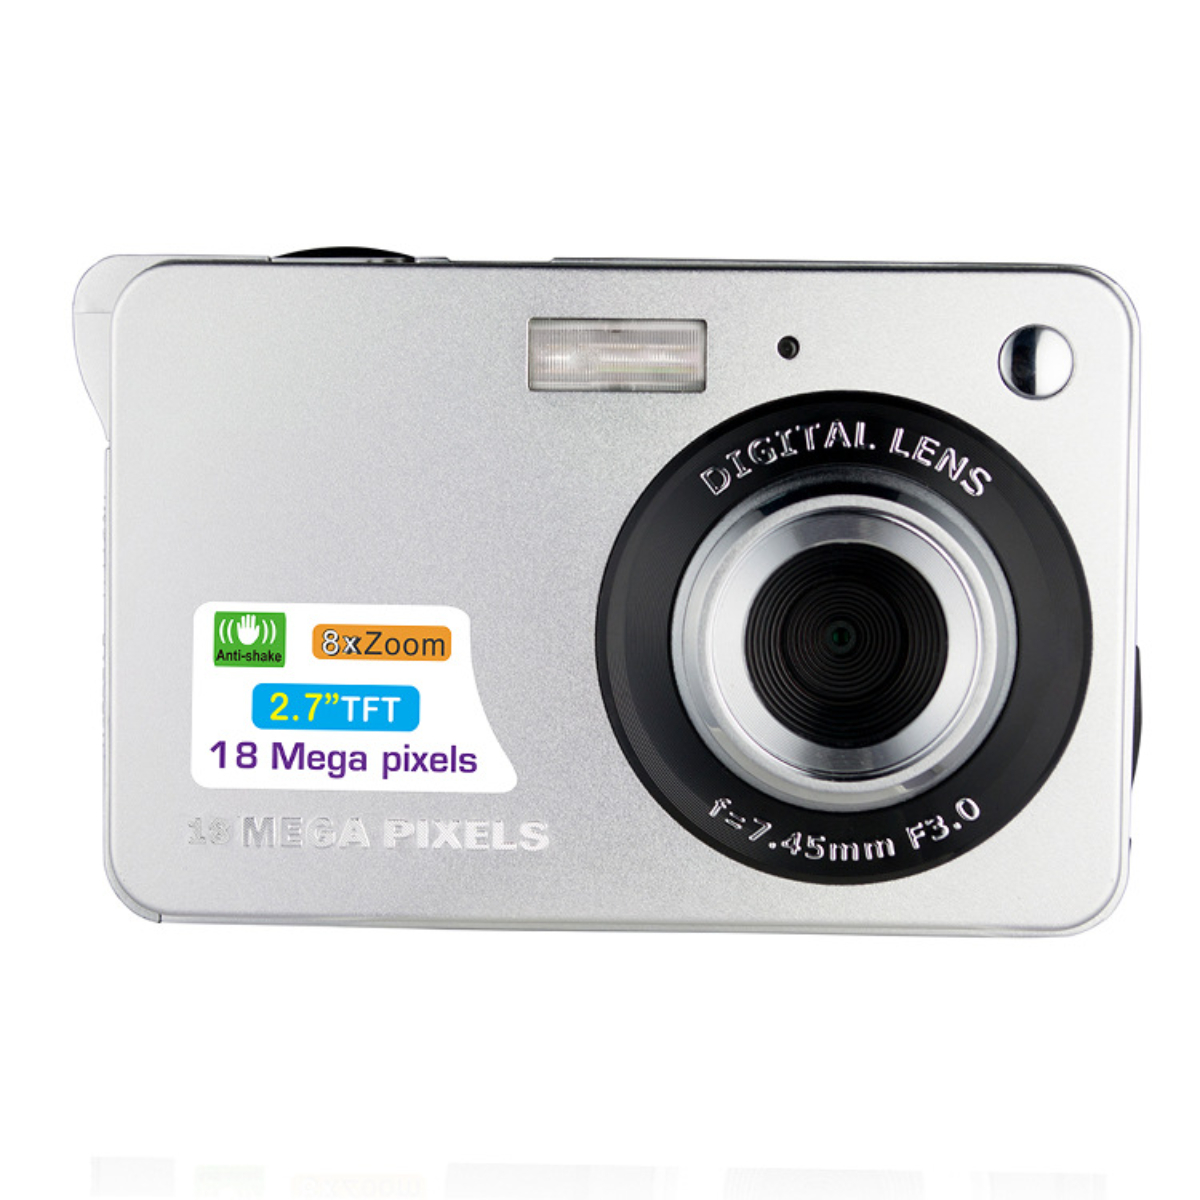 Foto Kamera Video und Digitalkamera Megapixel all-in-one SYNTEK 18 SLR weiß, TFT-LCD weiß Digitalkamera kleine